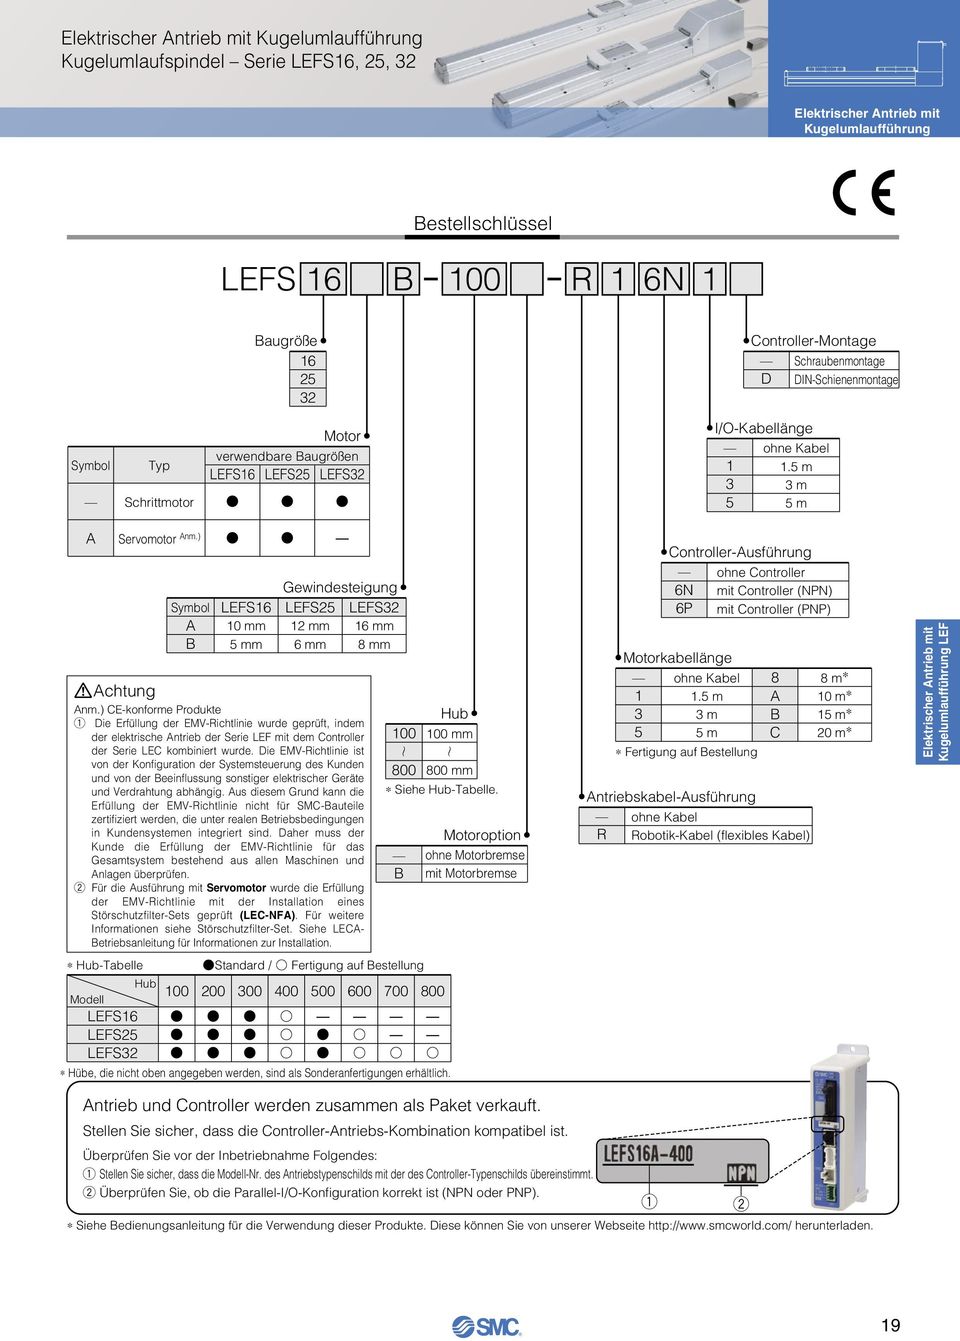 ) Hub-Tabelle Hub LEFS LEFS LEFS3 Symbol A B LEFS mm mm Standard / Gewindesteigung LEFS LEFS3 mm mm mm mm Achtung Anm.